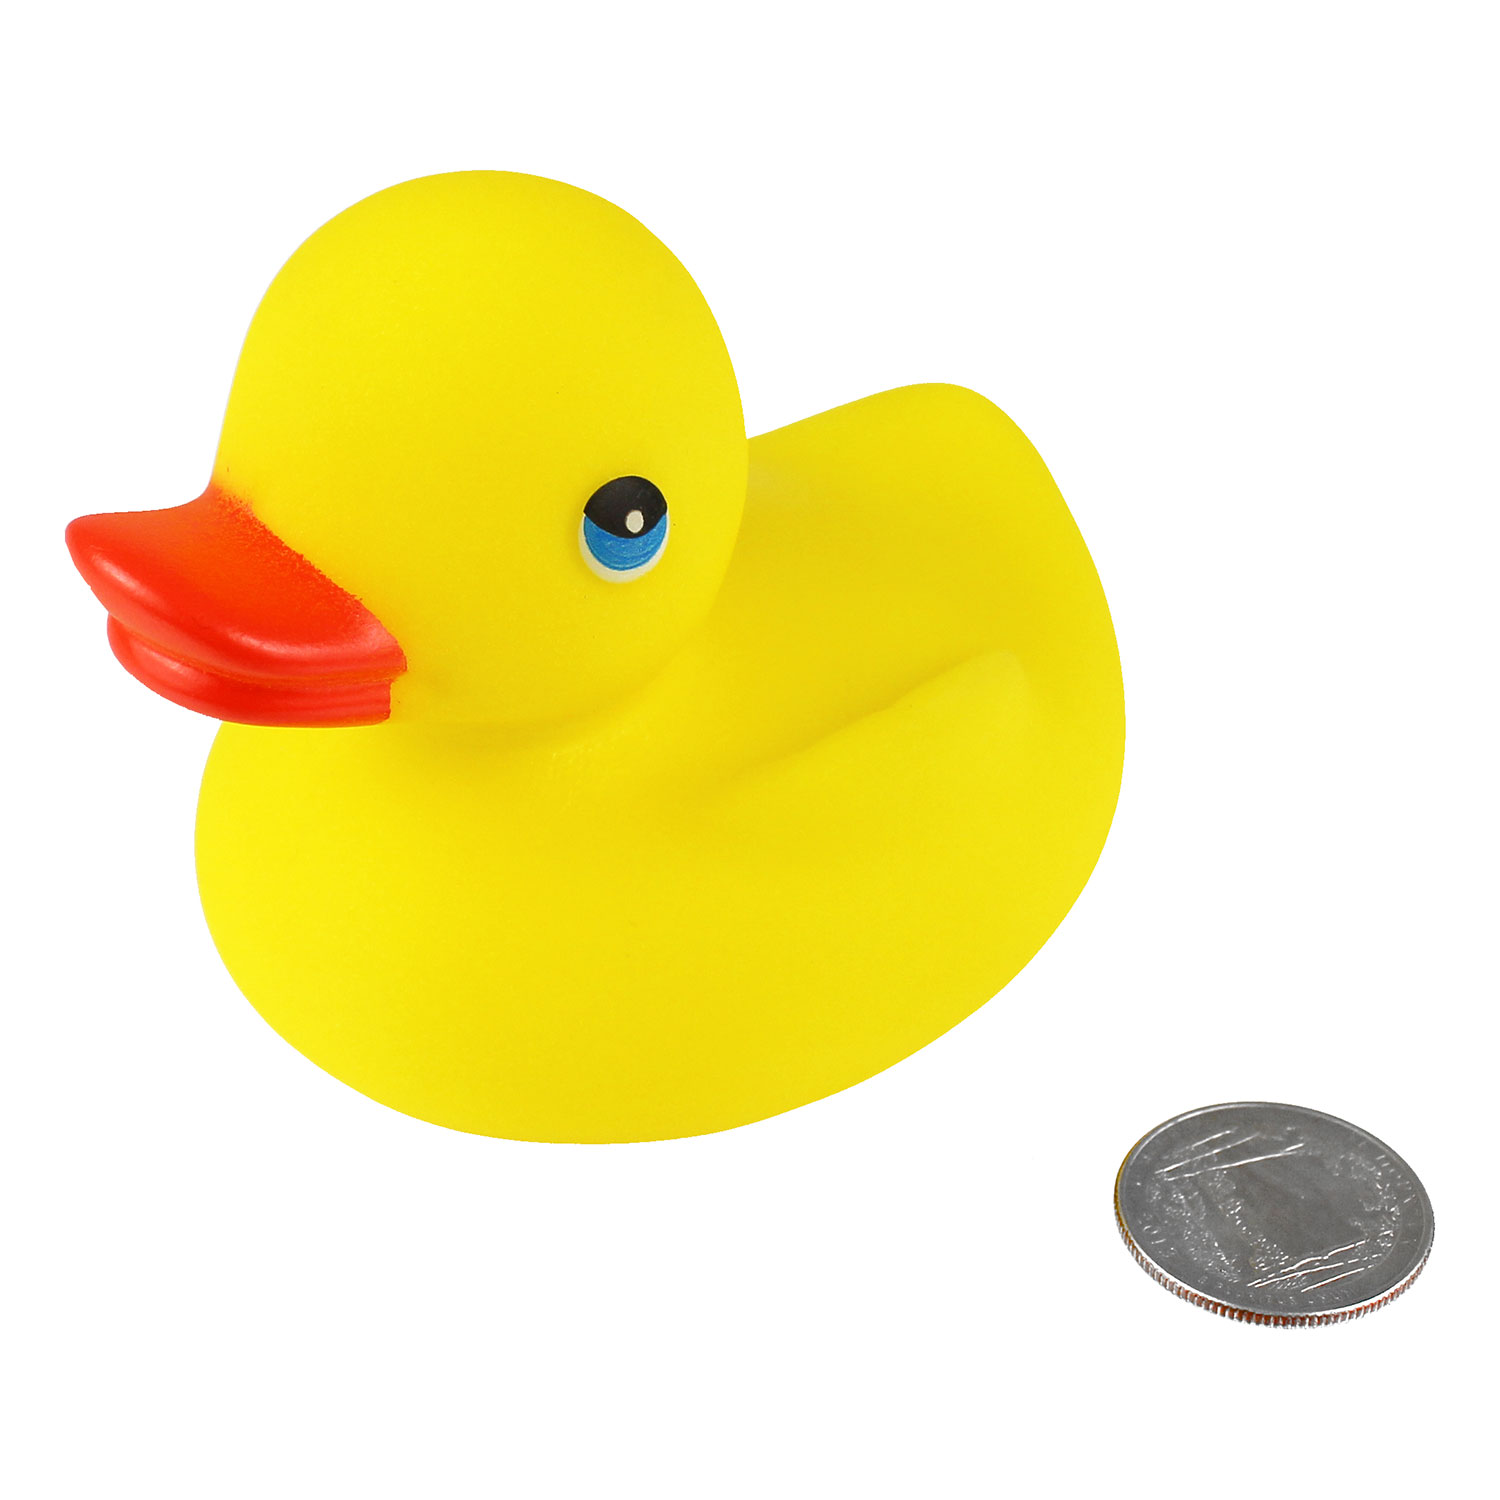 4 inch rubber ducks